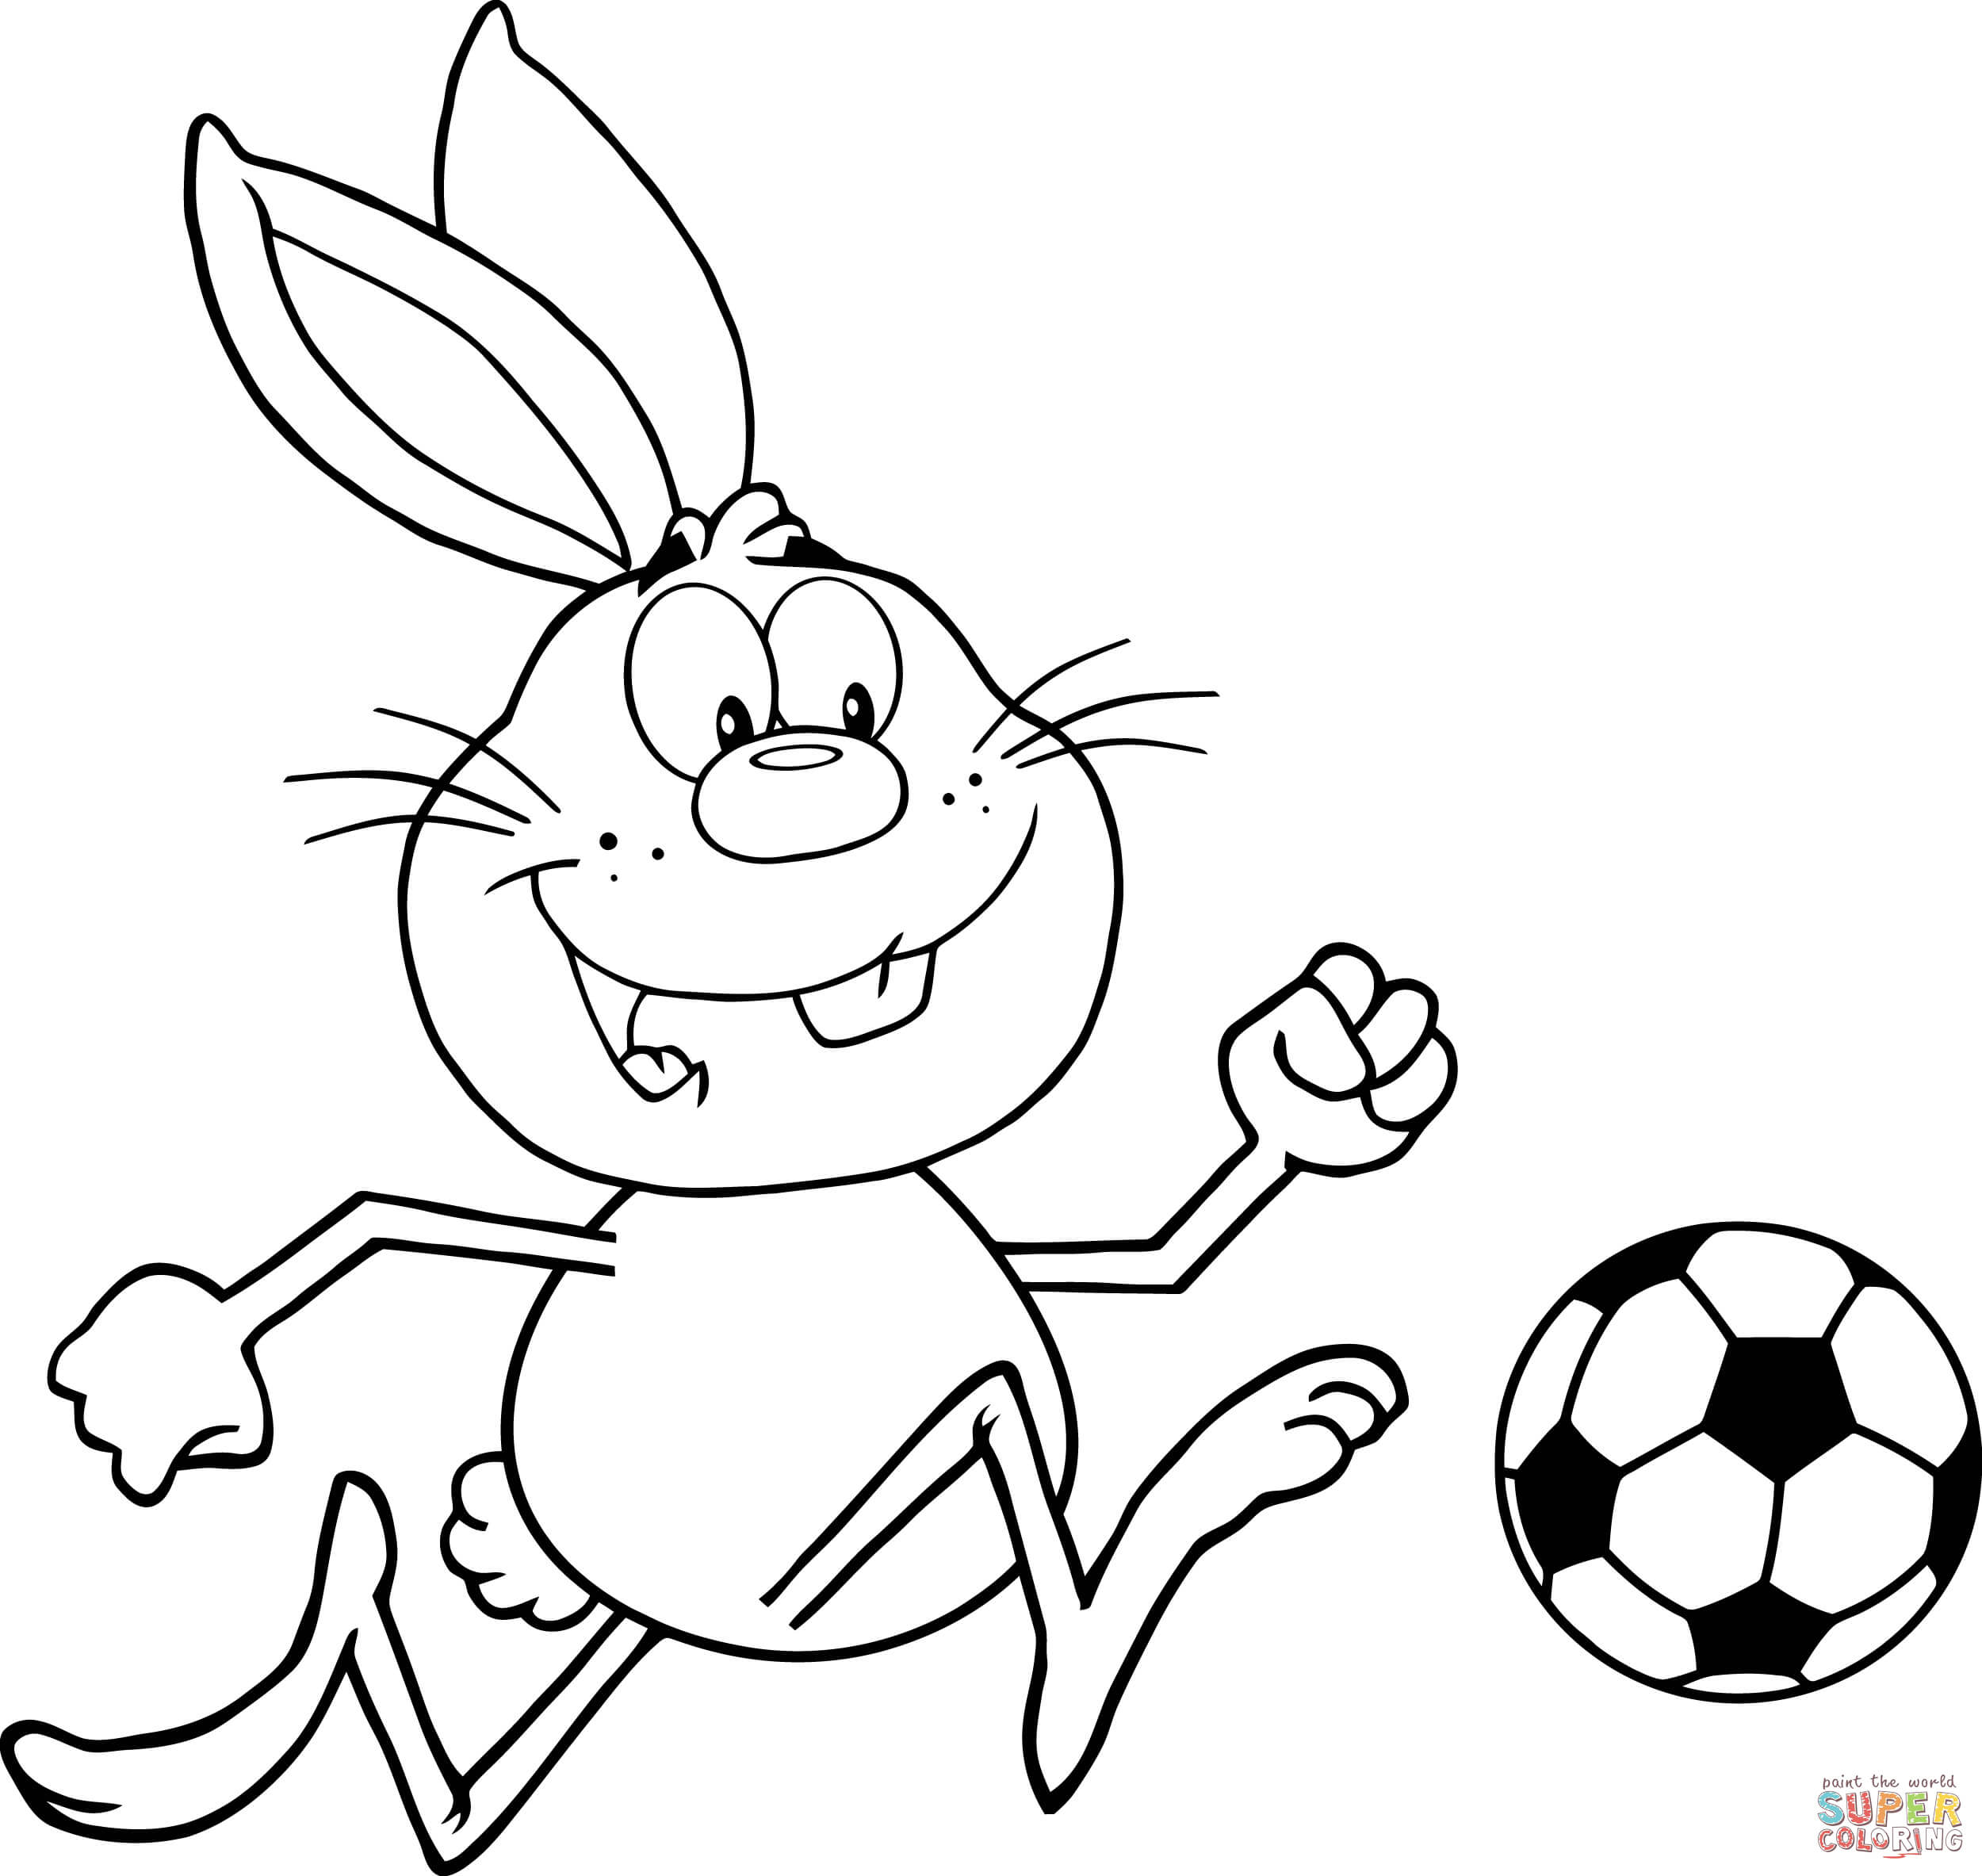 Soccer coloring #8, Download drawings